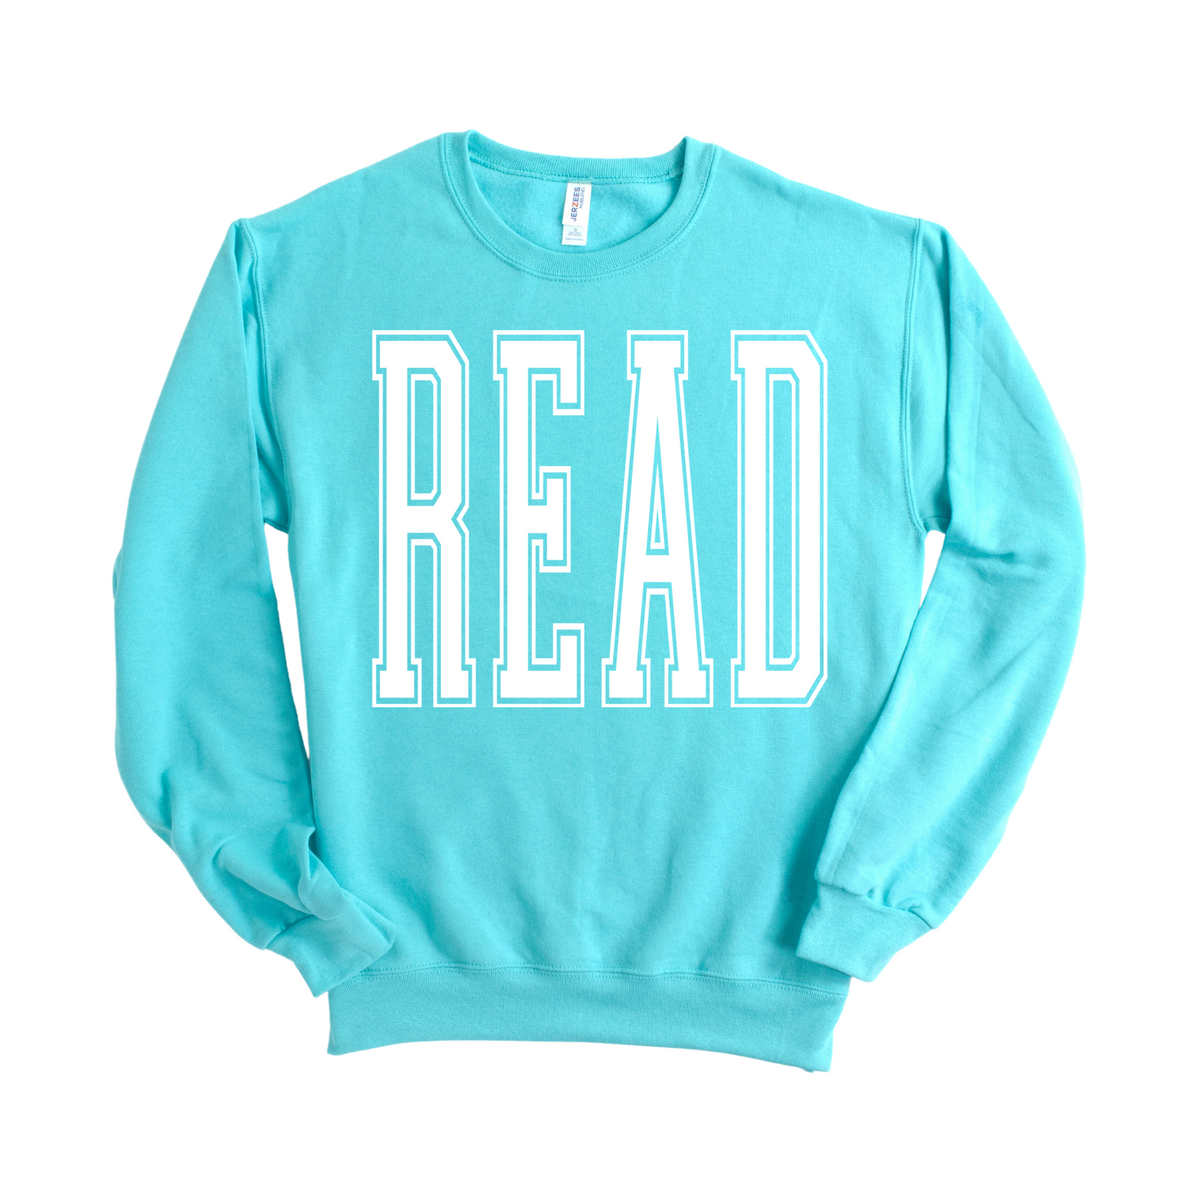 The Read Varsity Crewneck Sweatshirt